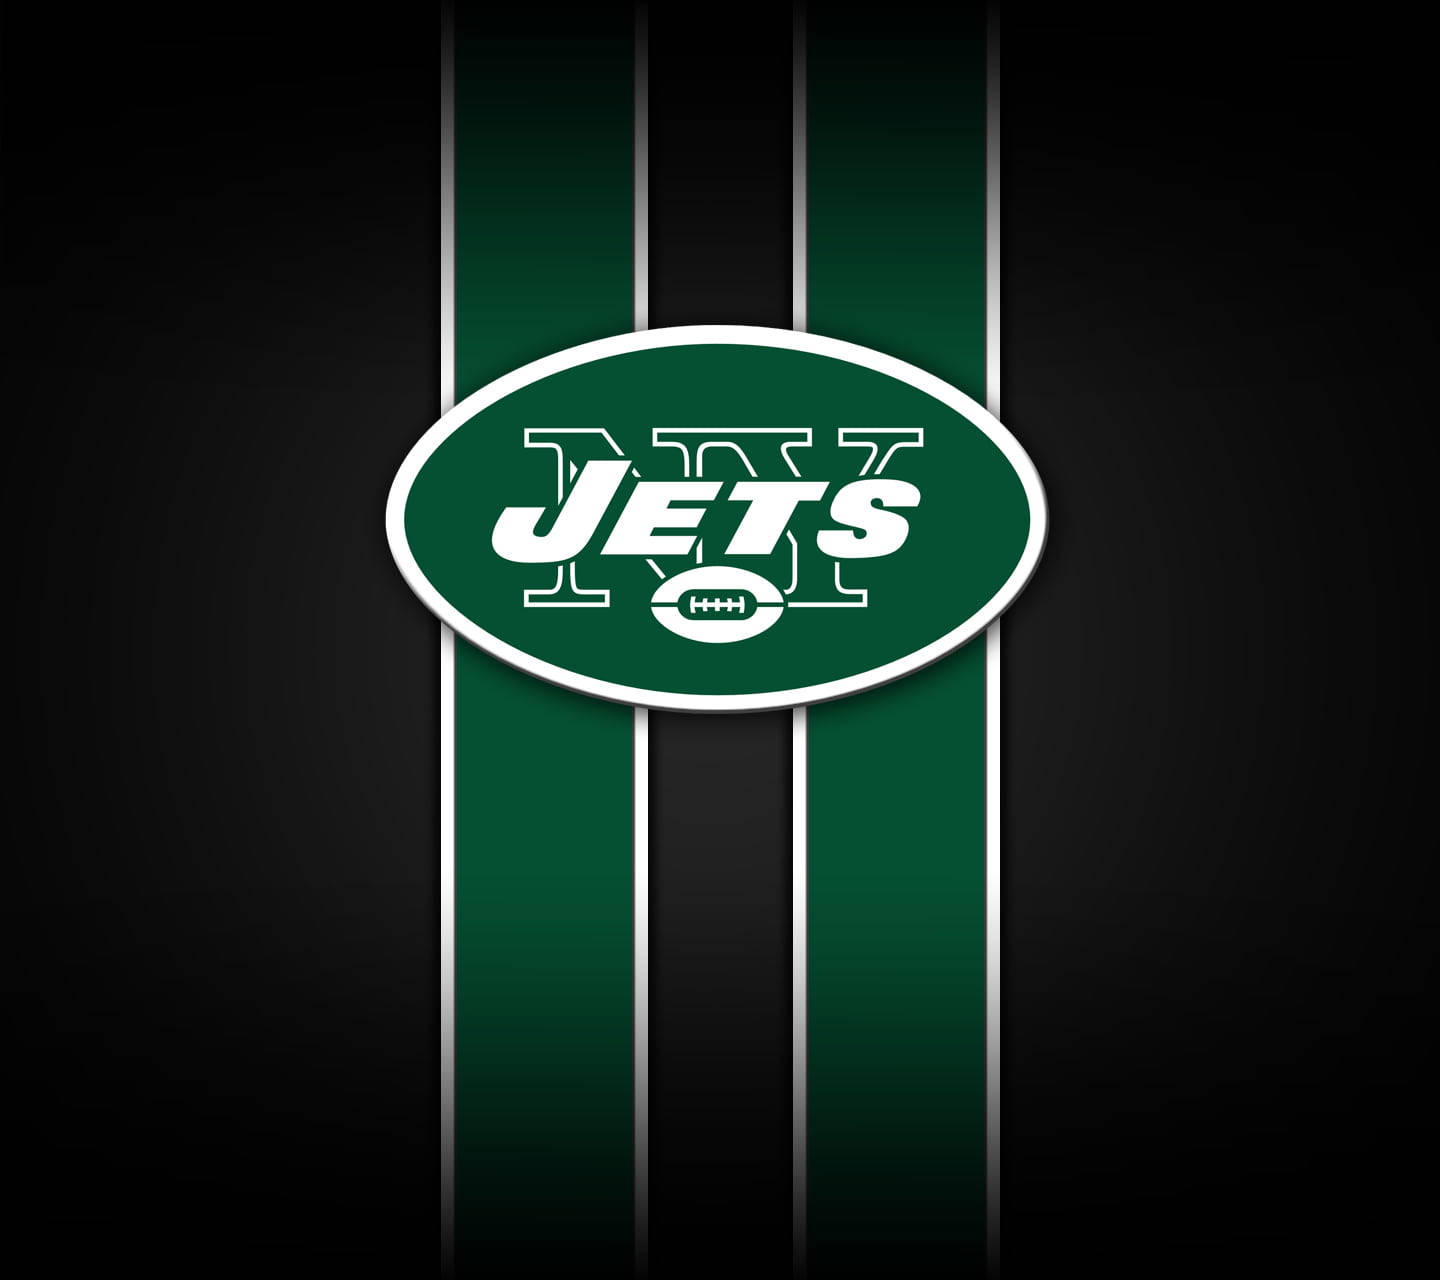 New York Jets Stripes Nfl Team Logo Background